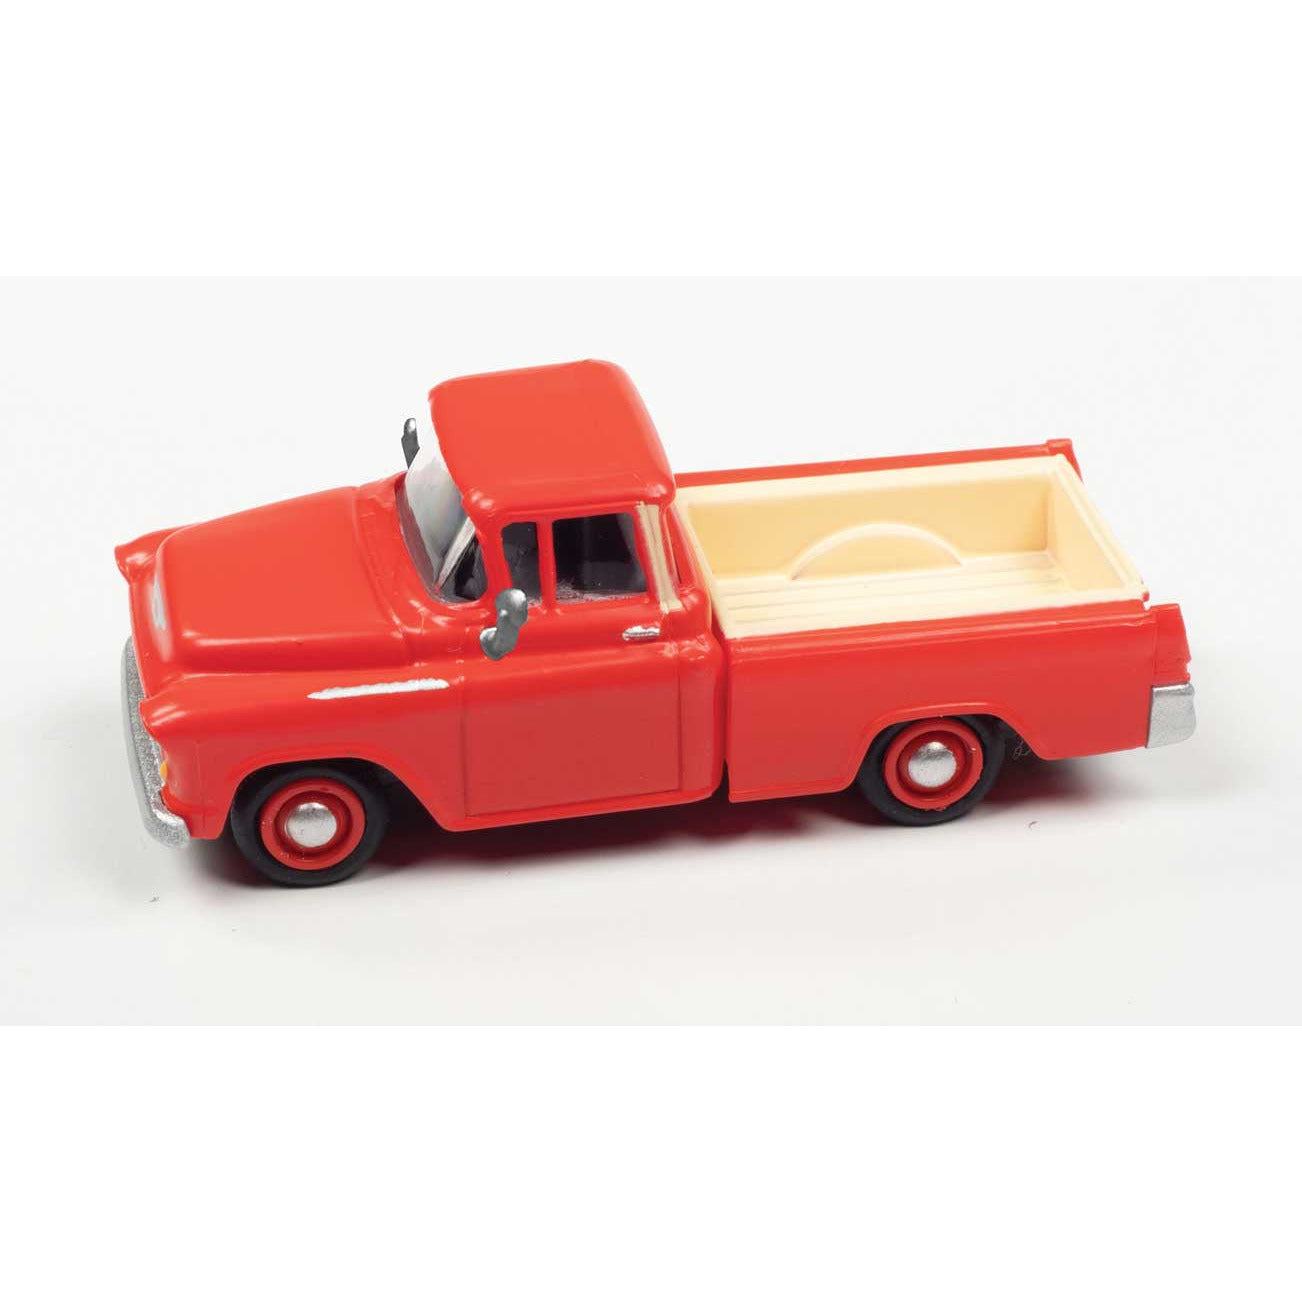 1955 Chevrolet Cameo Pickup Truck - Assembled - Mini Metals(R) Classic Metal Works #30623